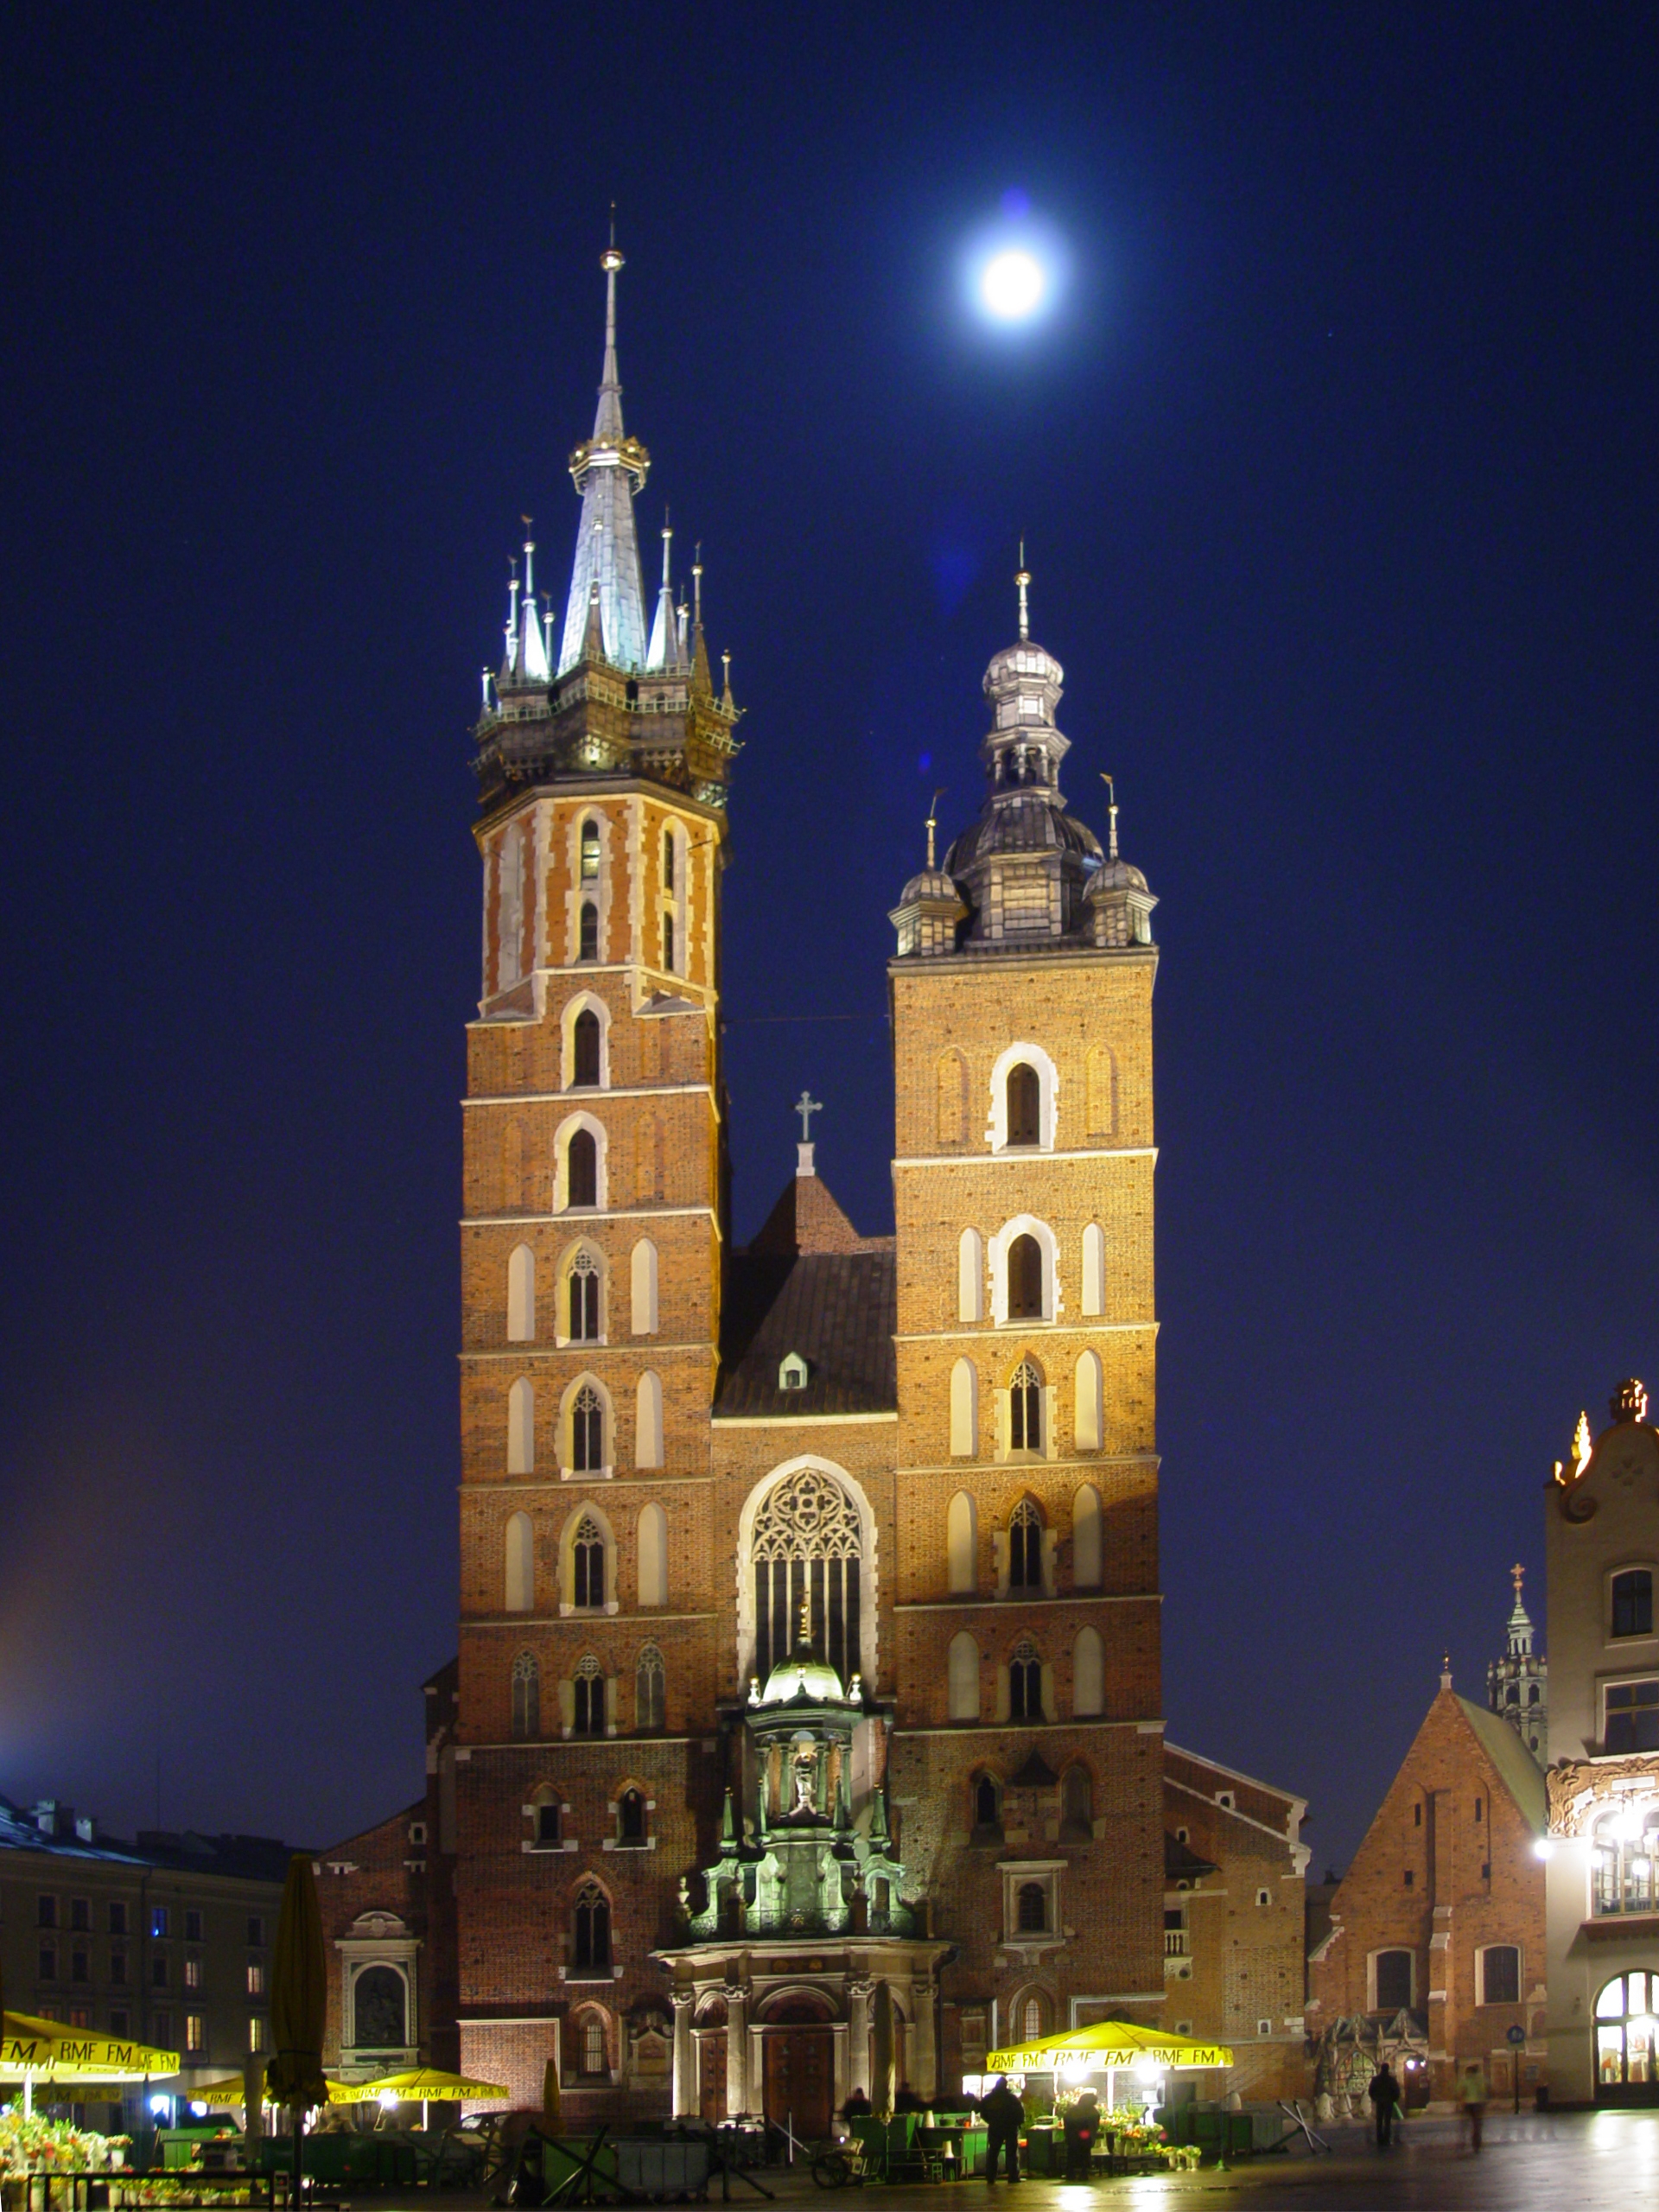 Krakow's main market square